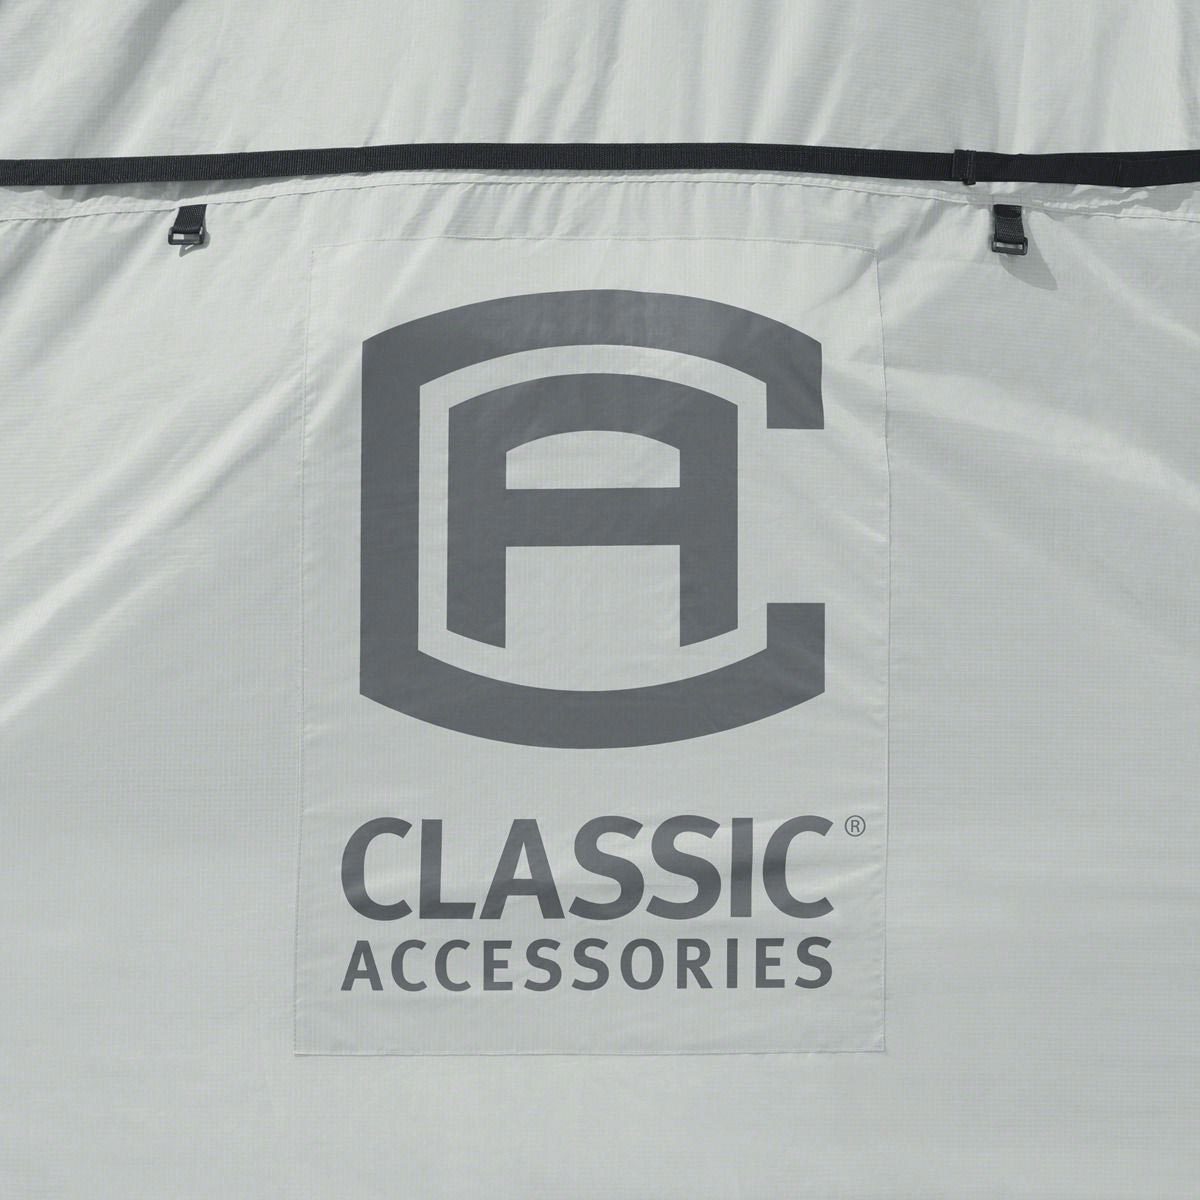 Classic Accessories Skyshield Caravan Cover in 3 Sizes - Signature Retail Stores